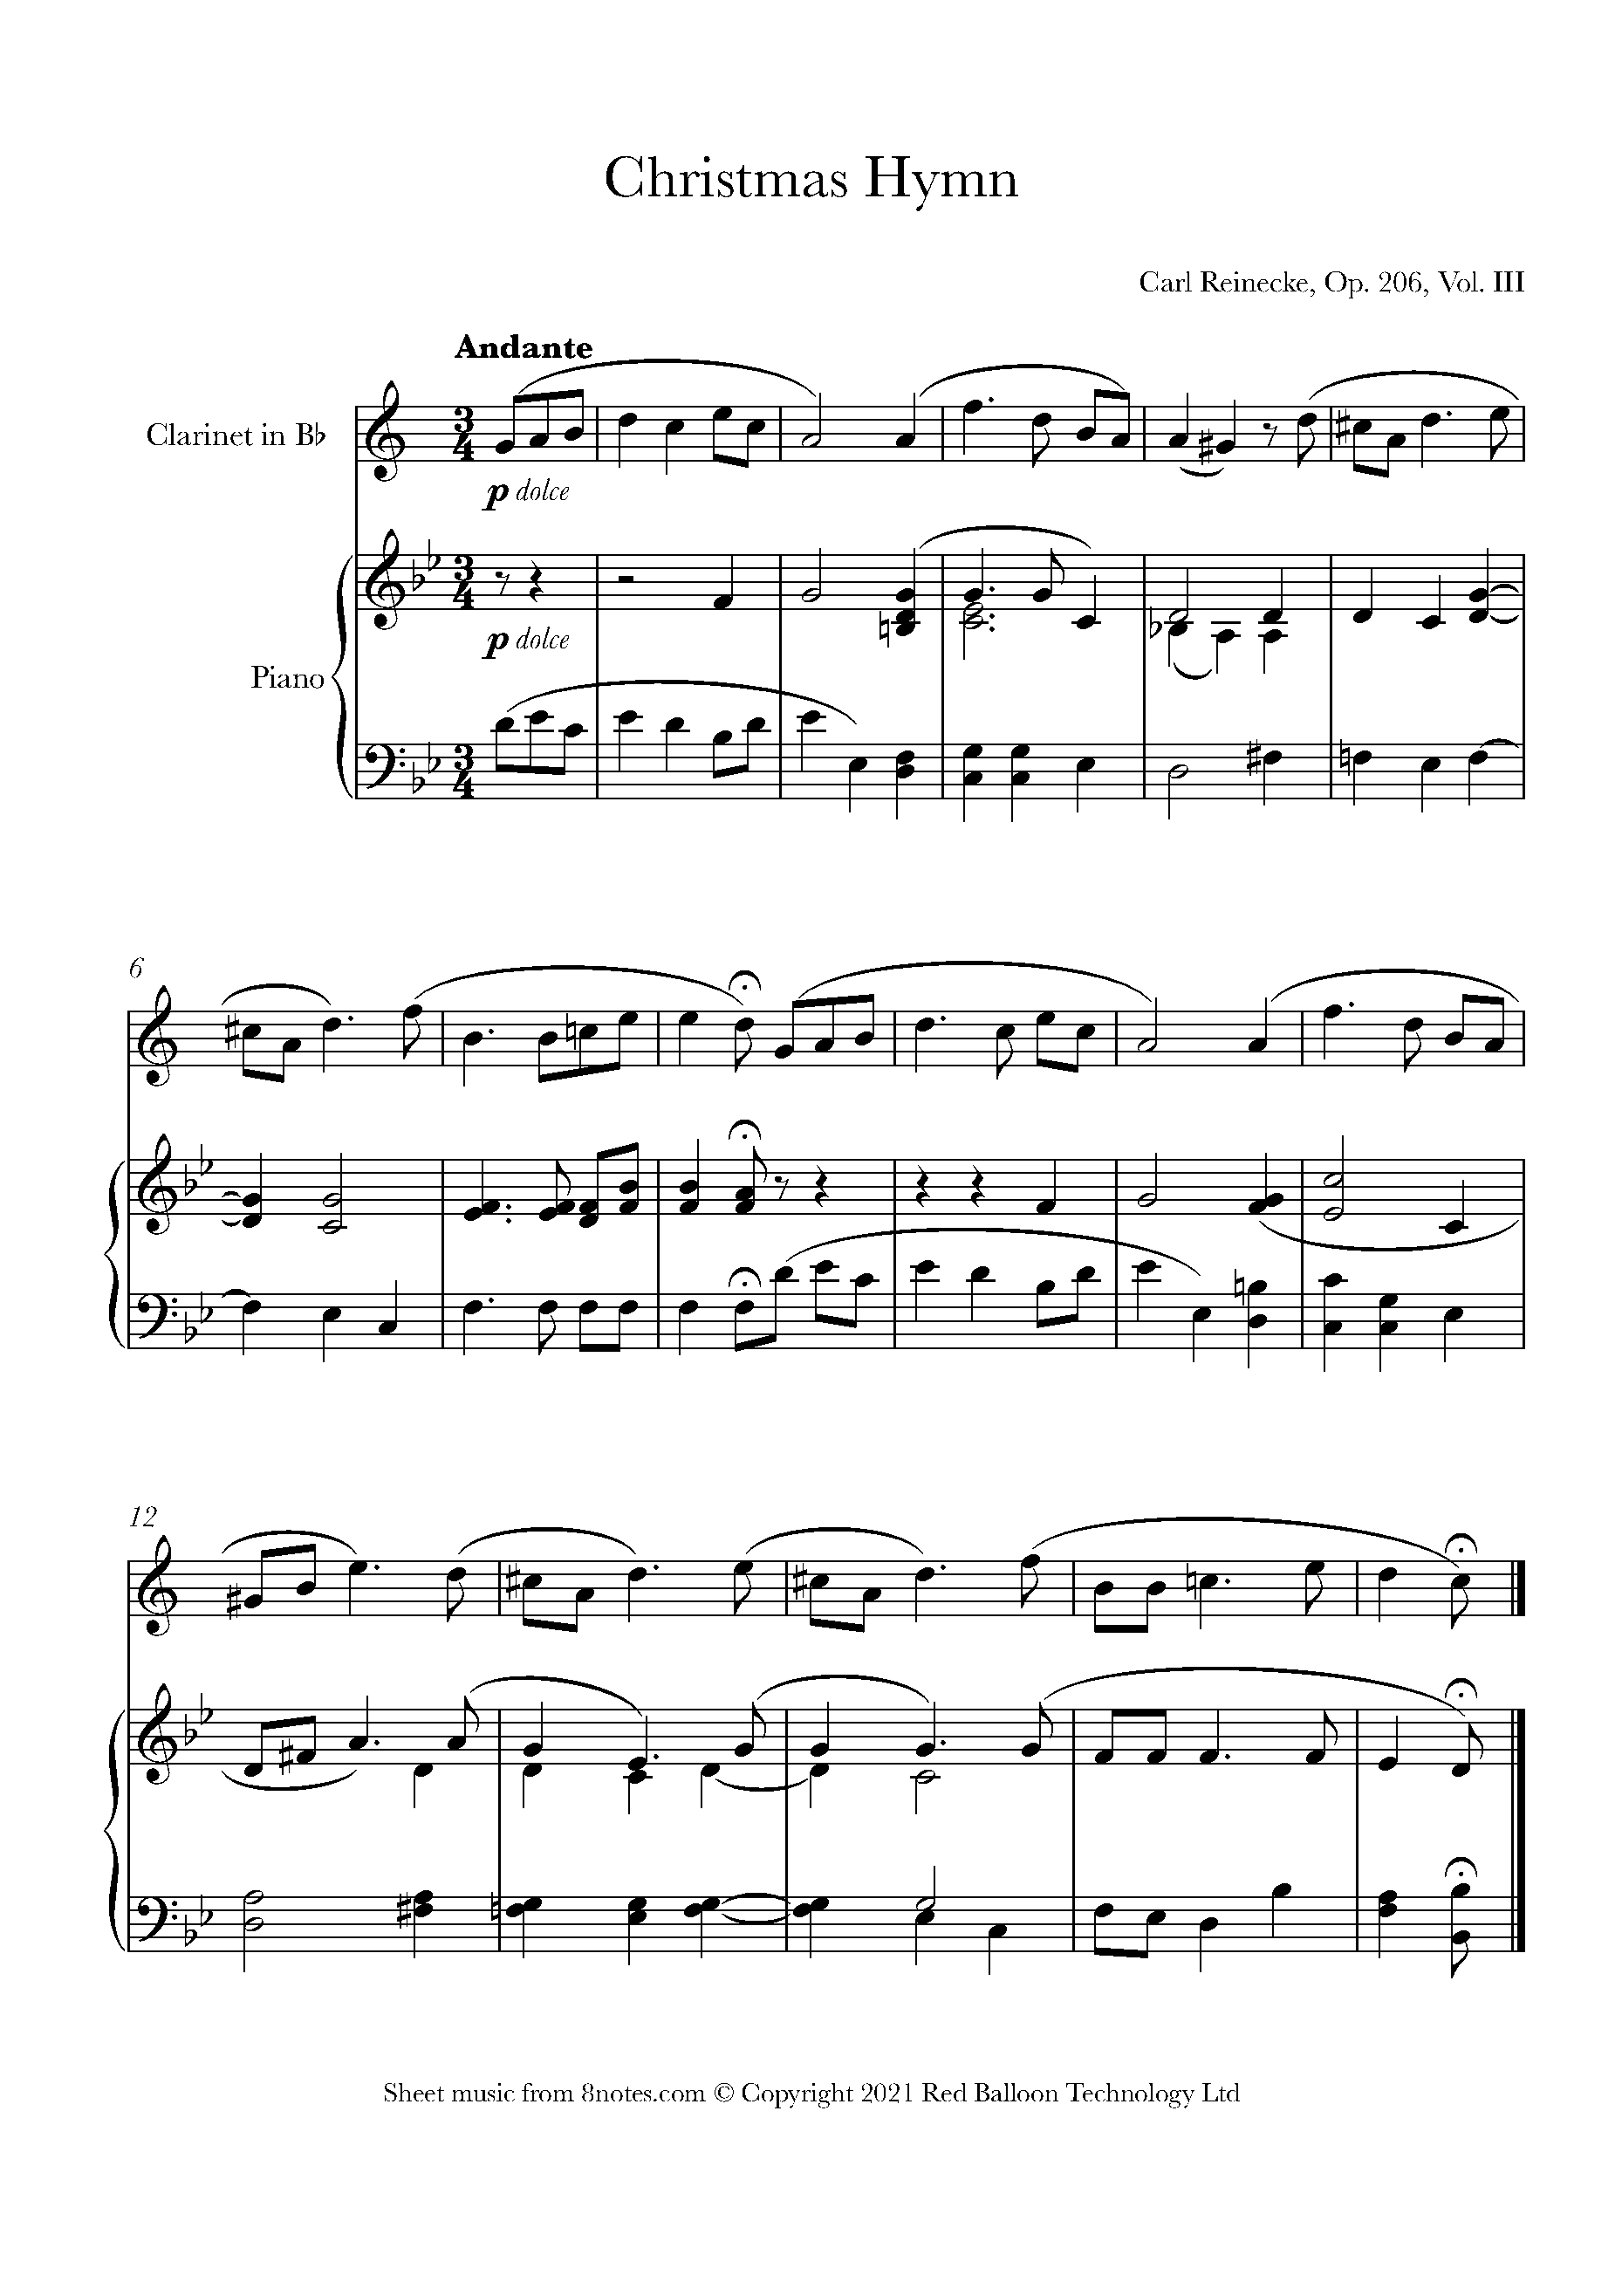 Reinecke - Christmas Hymn Op. 206, Vol. III Sheet music for Clarinet ...